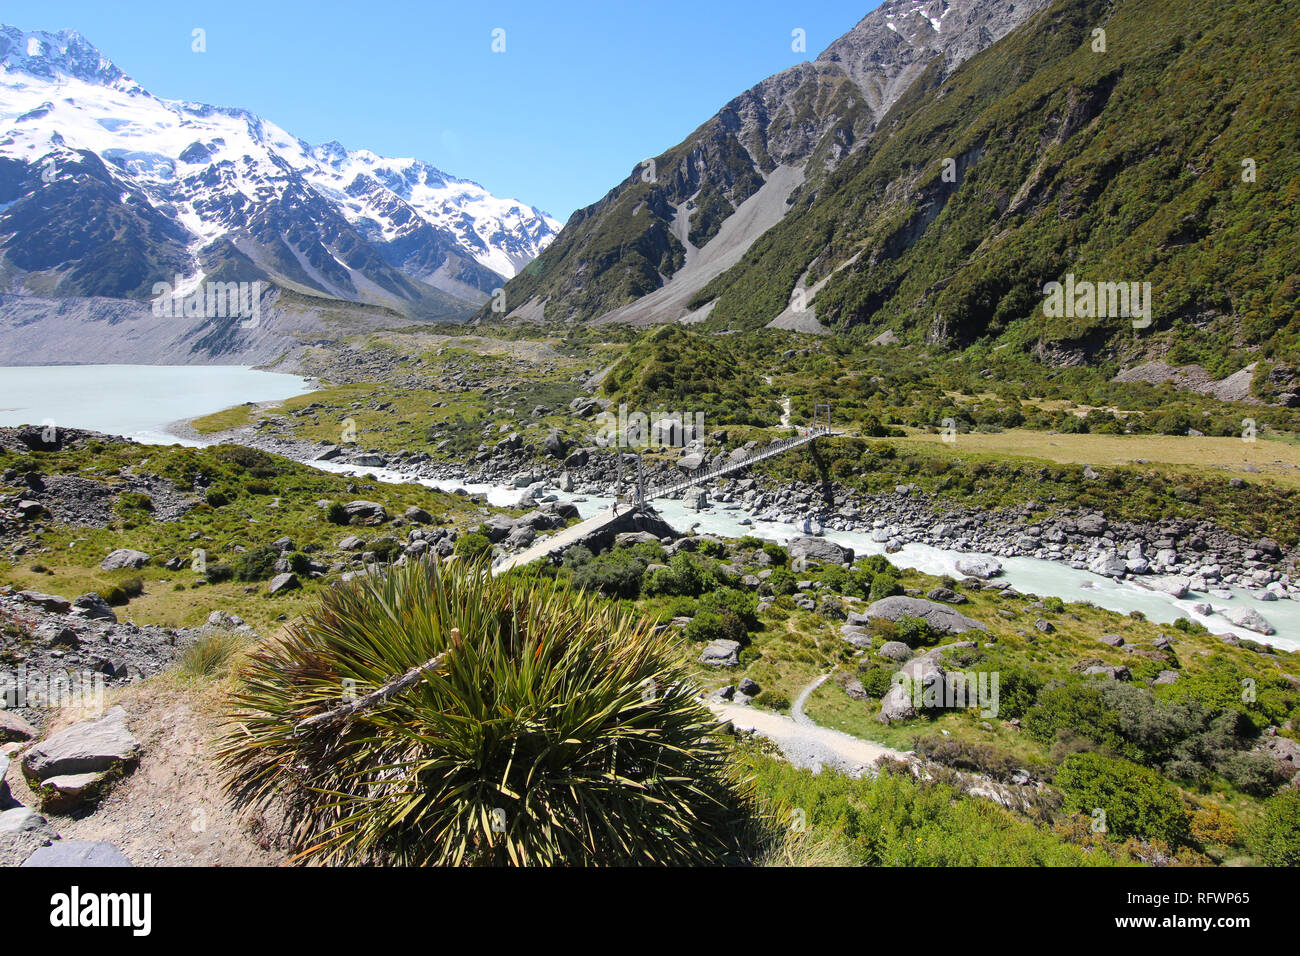 Das Hooker Valley Track, Südinsel, Neuseeland. Das Hooker Valley Track ist die populärste kurze Wanderweg im Aoraki/Mount Cook N. P. Stockfoto